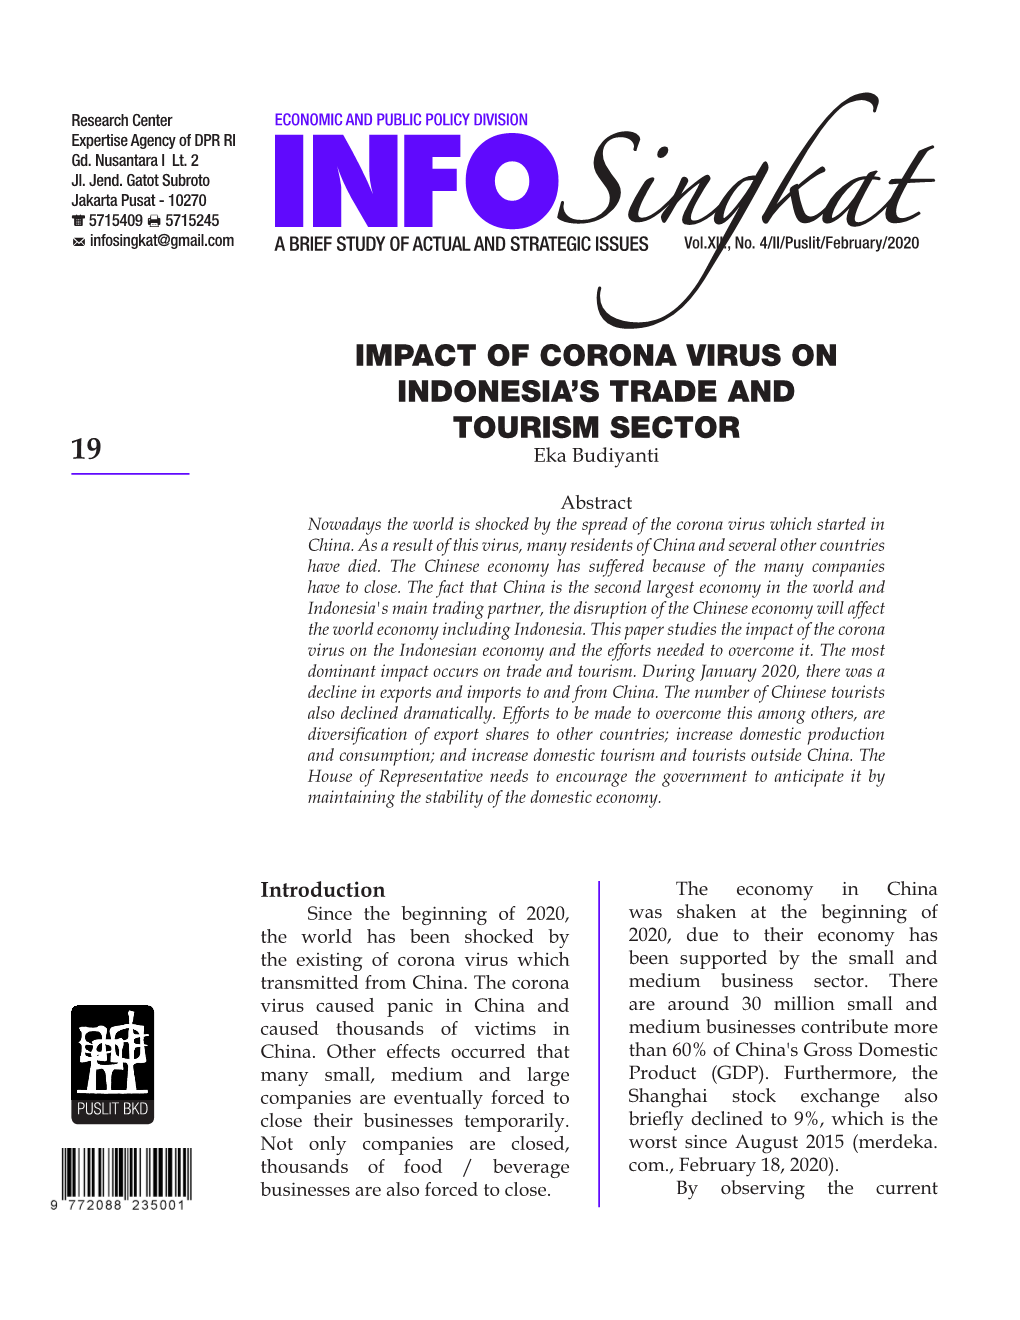 Impact of Corona Virus on Indonesia's Trade And